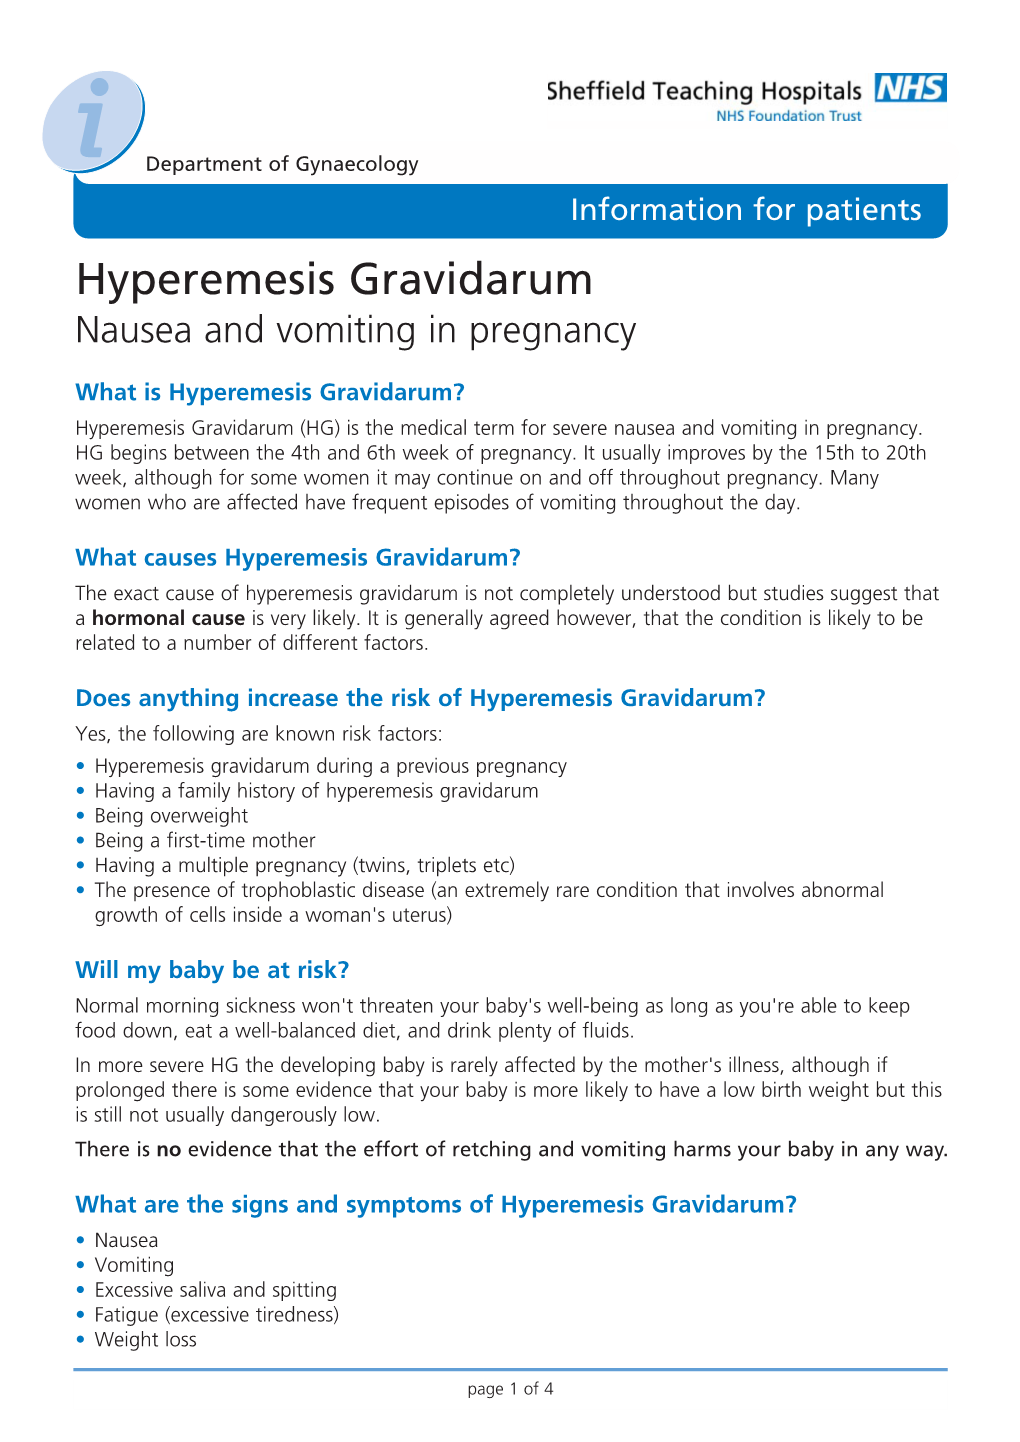 Hyperemesis Gravidarum Nausea and Vomiting in Pregnancy